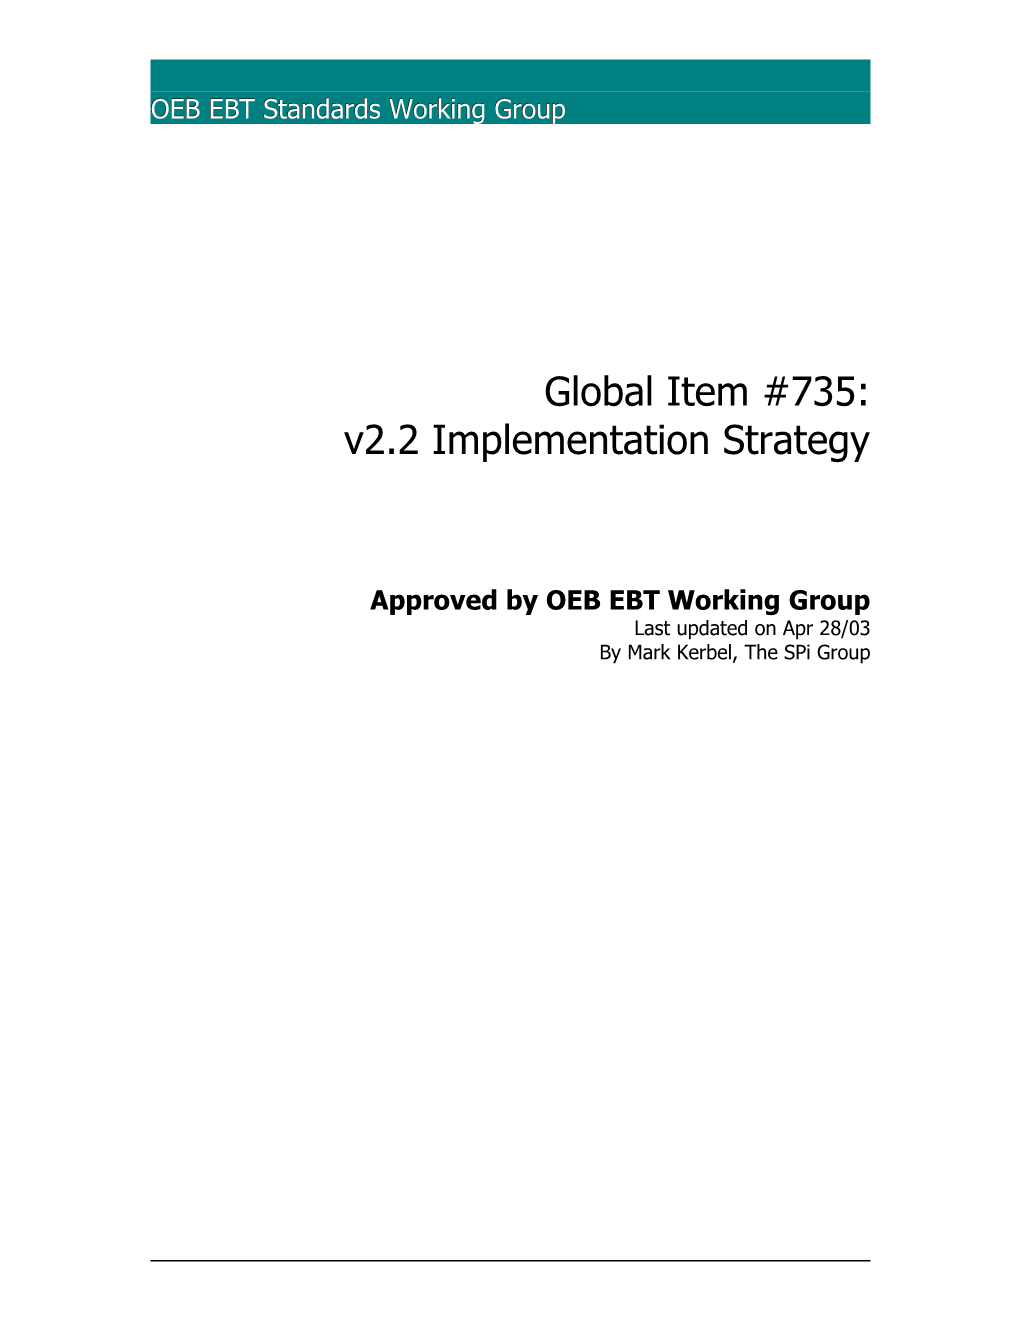 GI 735 - V2.2 Rollout Strategy